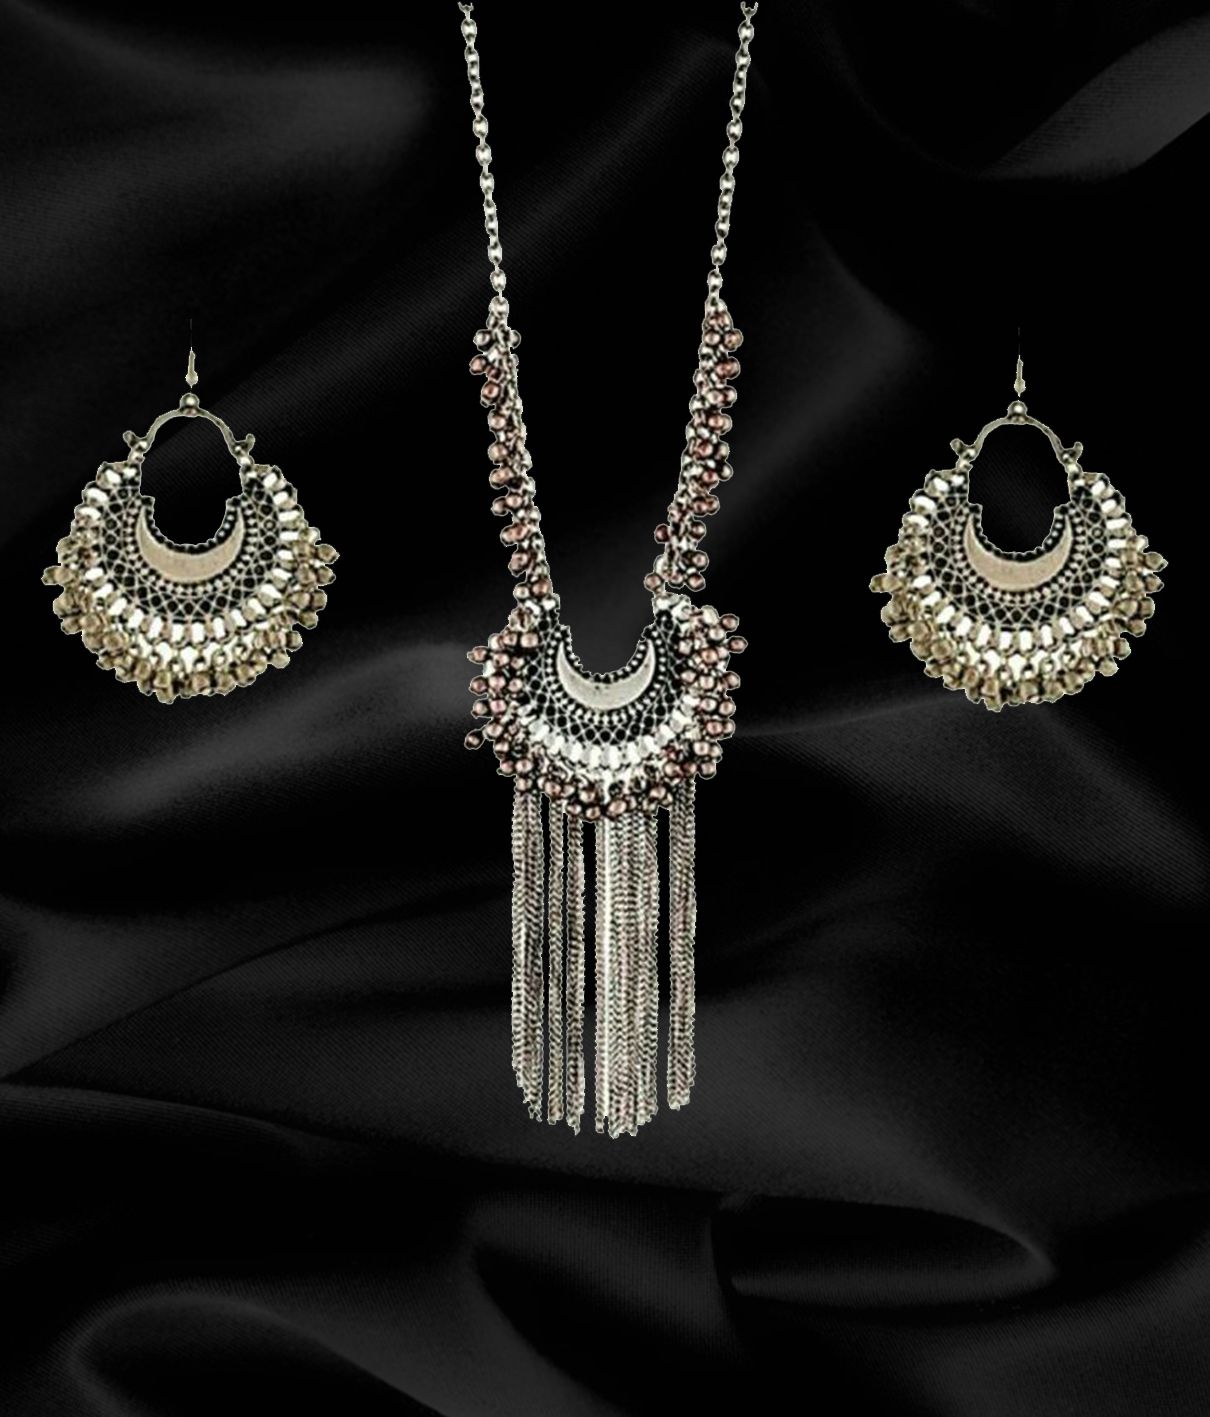     			A M INTERNATIONAL Alloy Silver Contemporary Contemporary/Fashion Necklaces Set